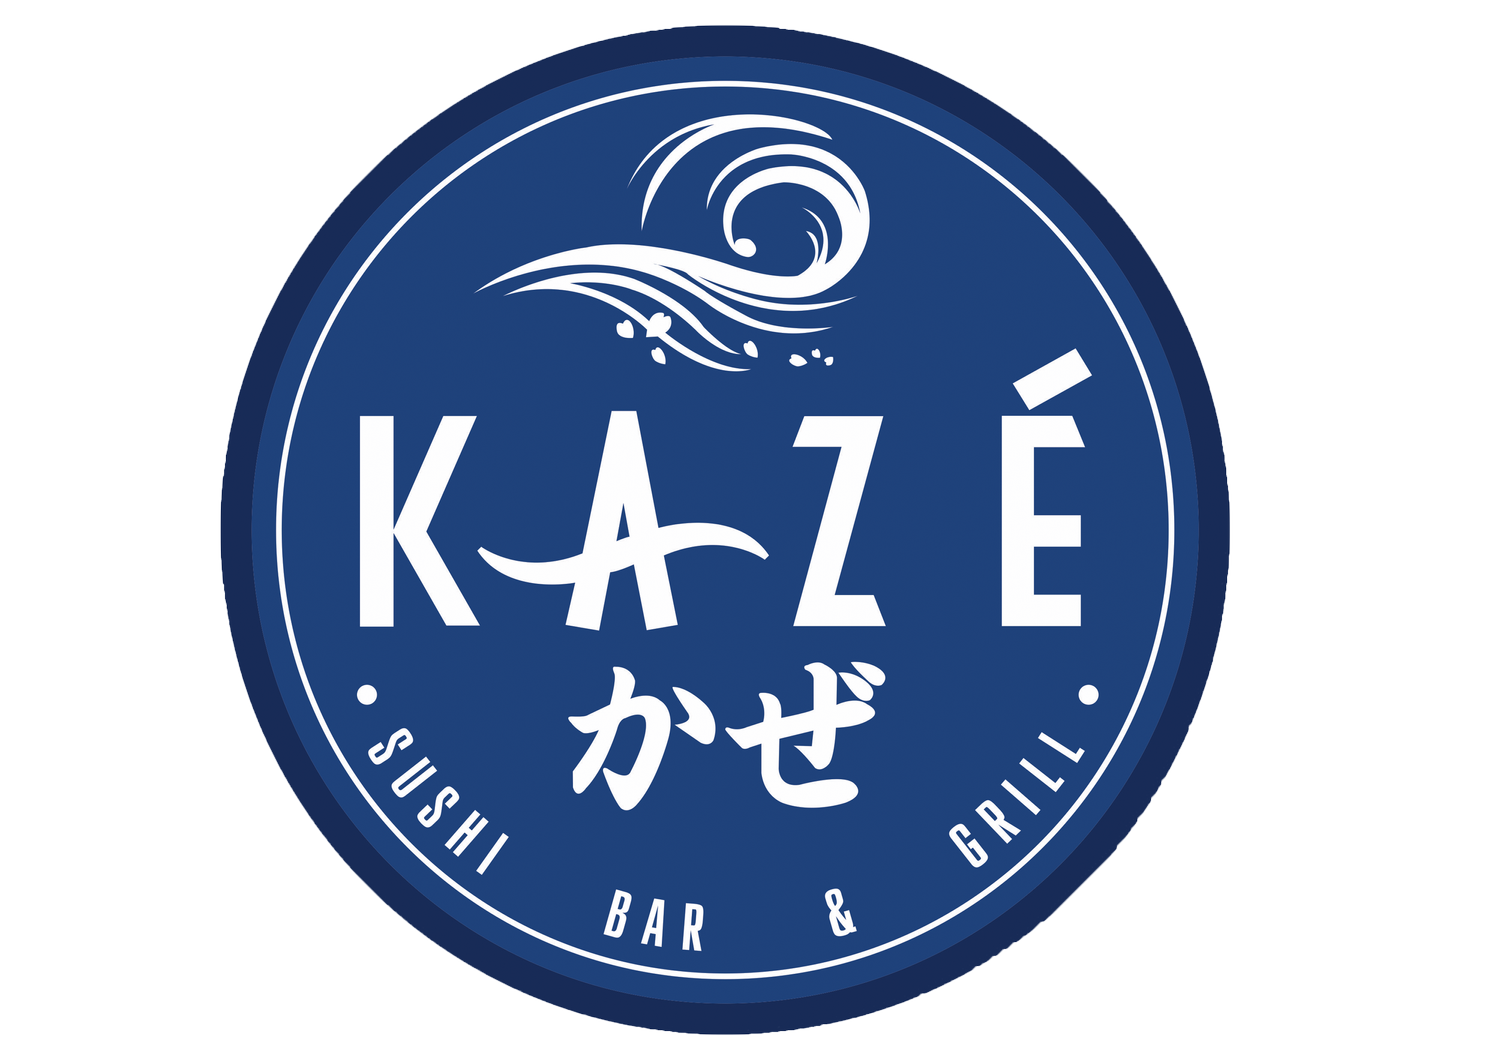 Kaze | Sushi Bar and Grill